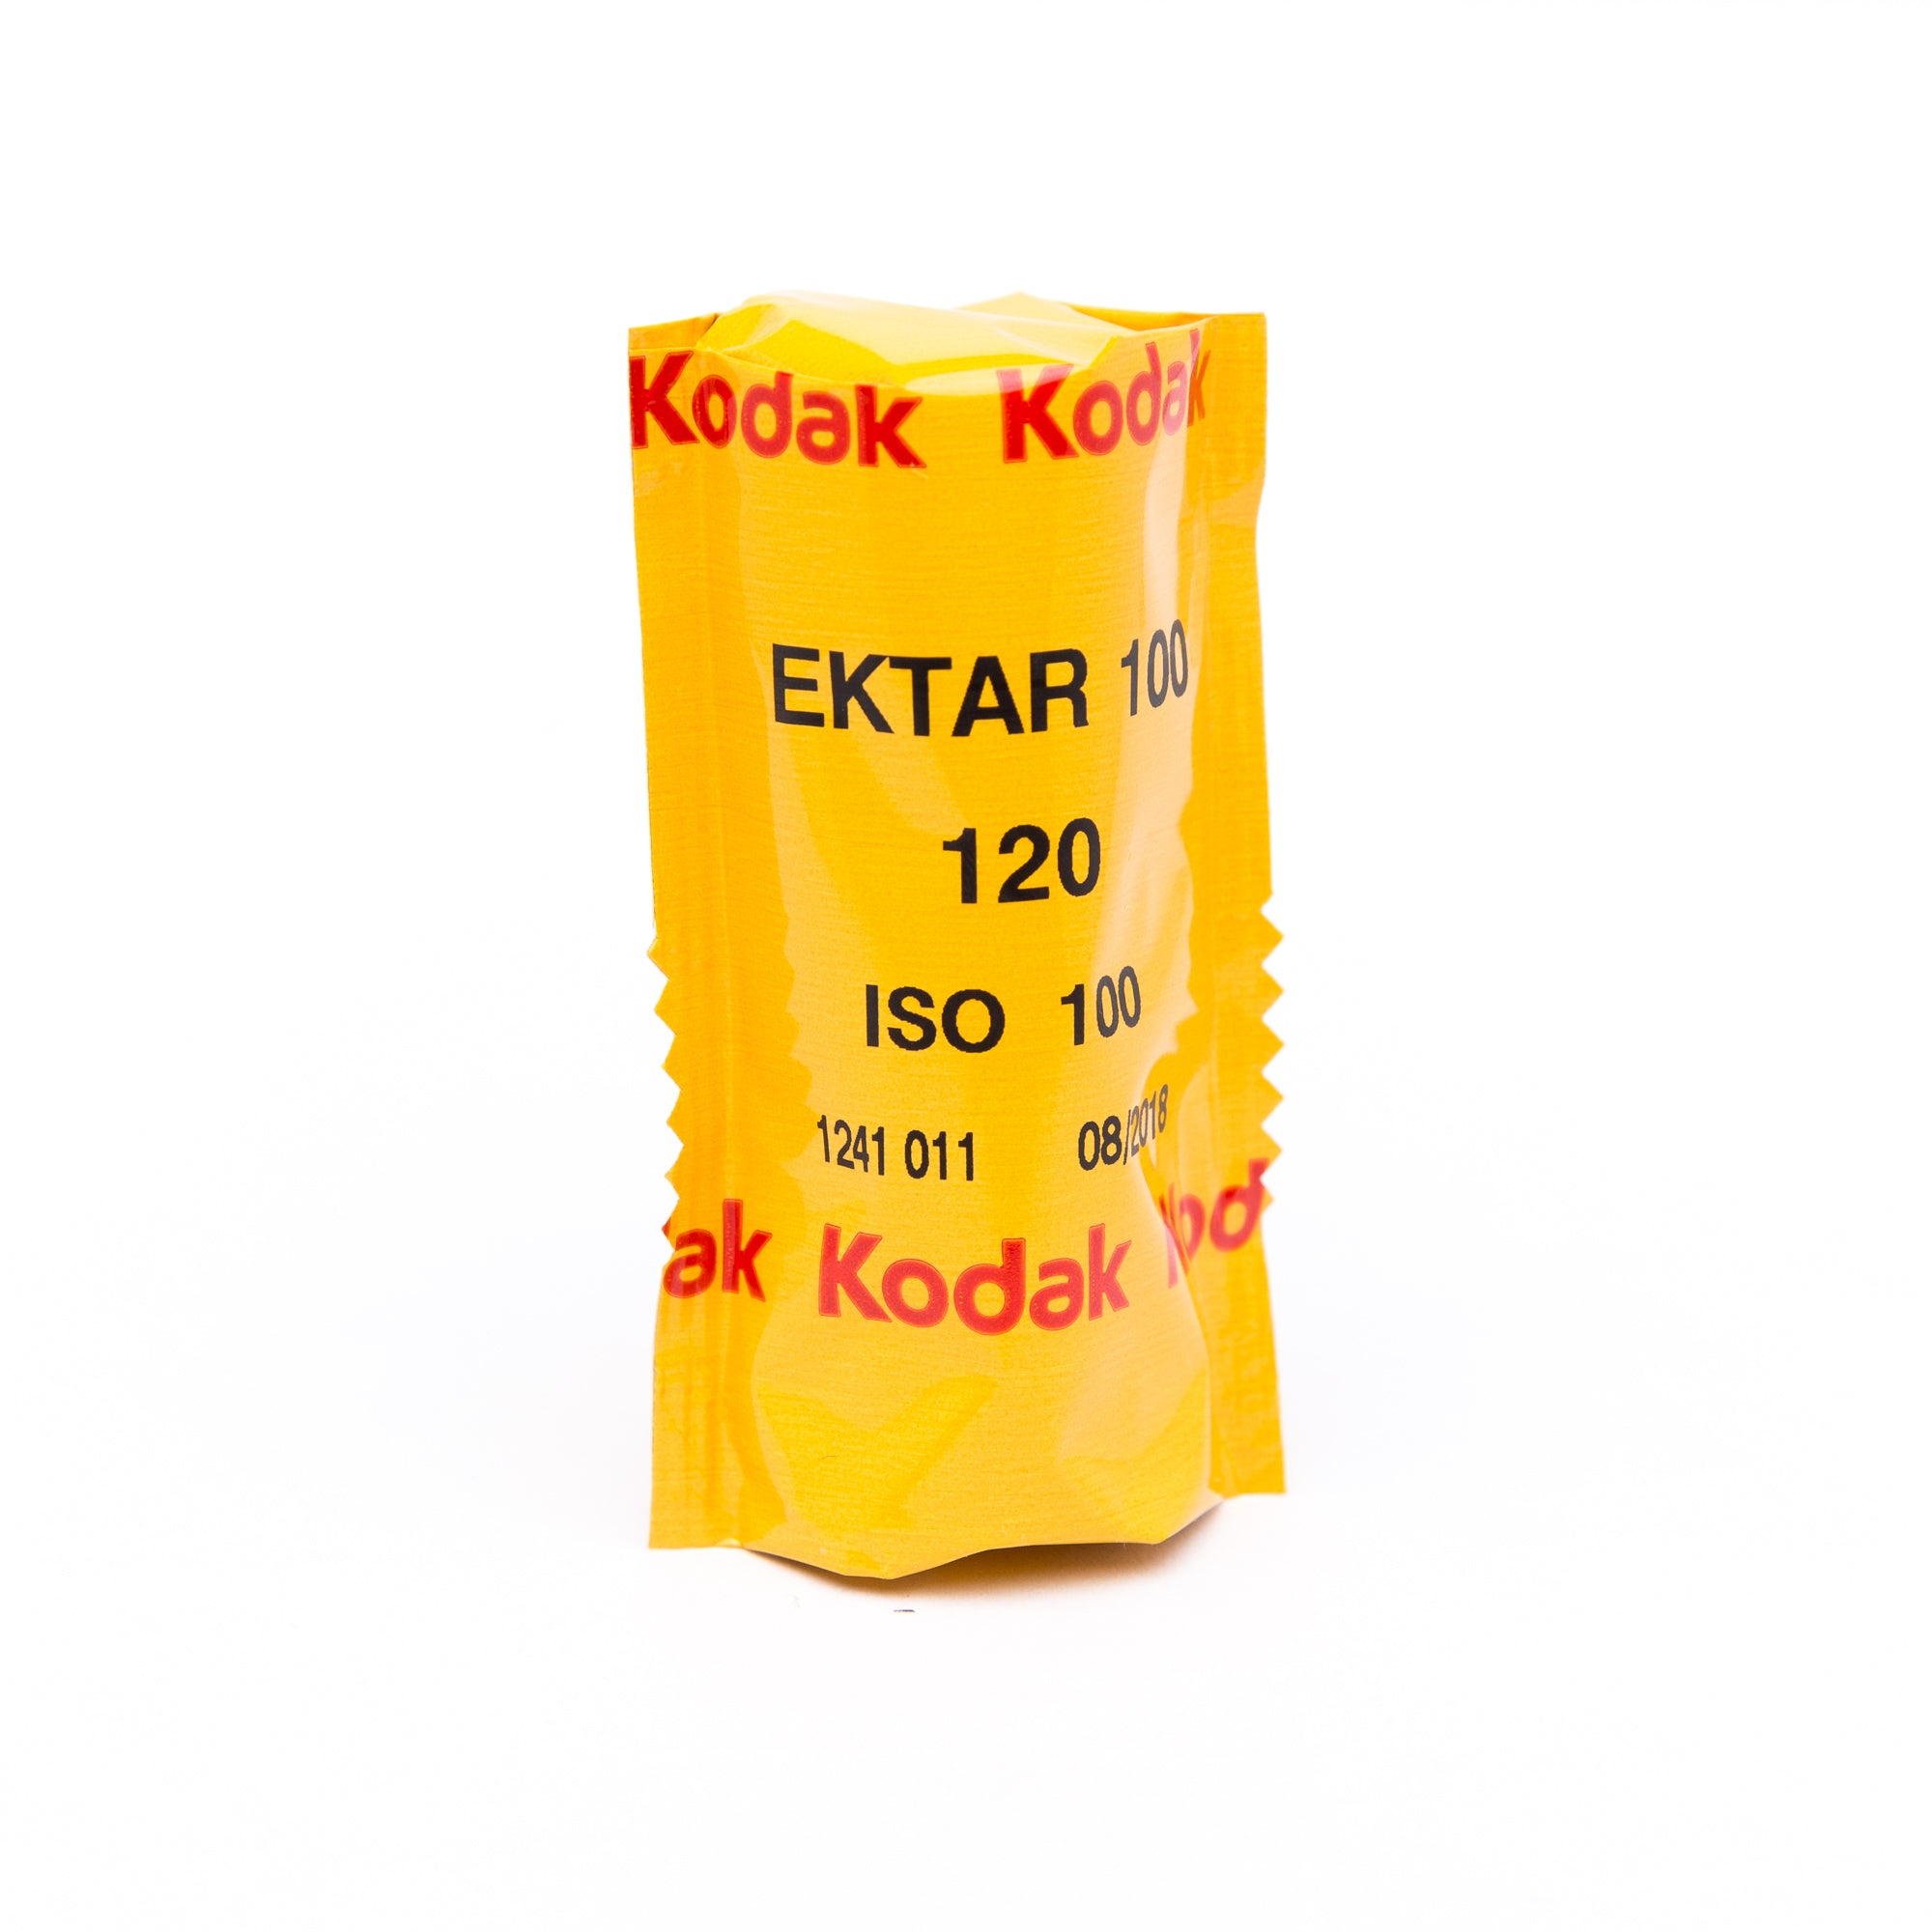 Kodak Ektar 120 Roll Film - Single Roll (split from pack of 5)